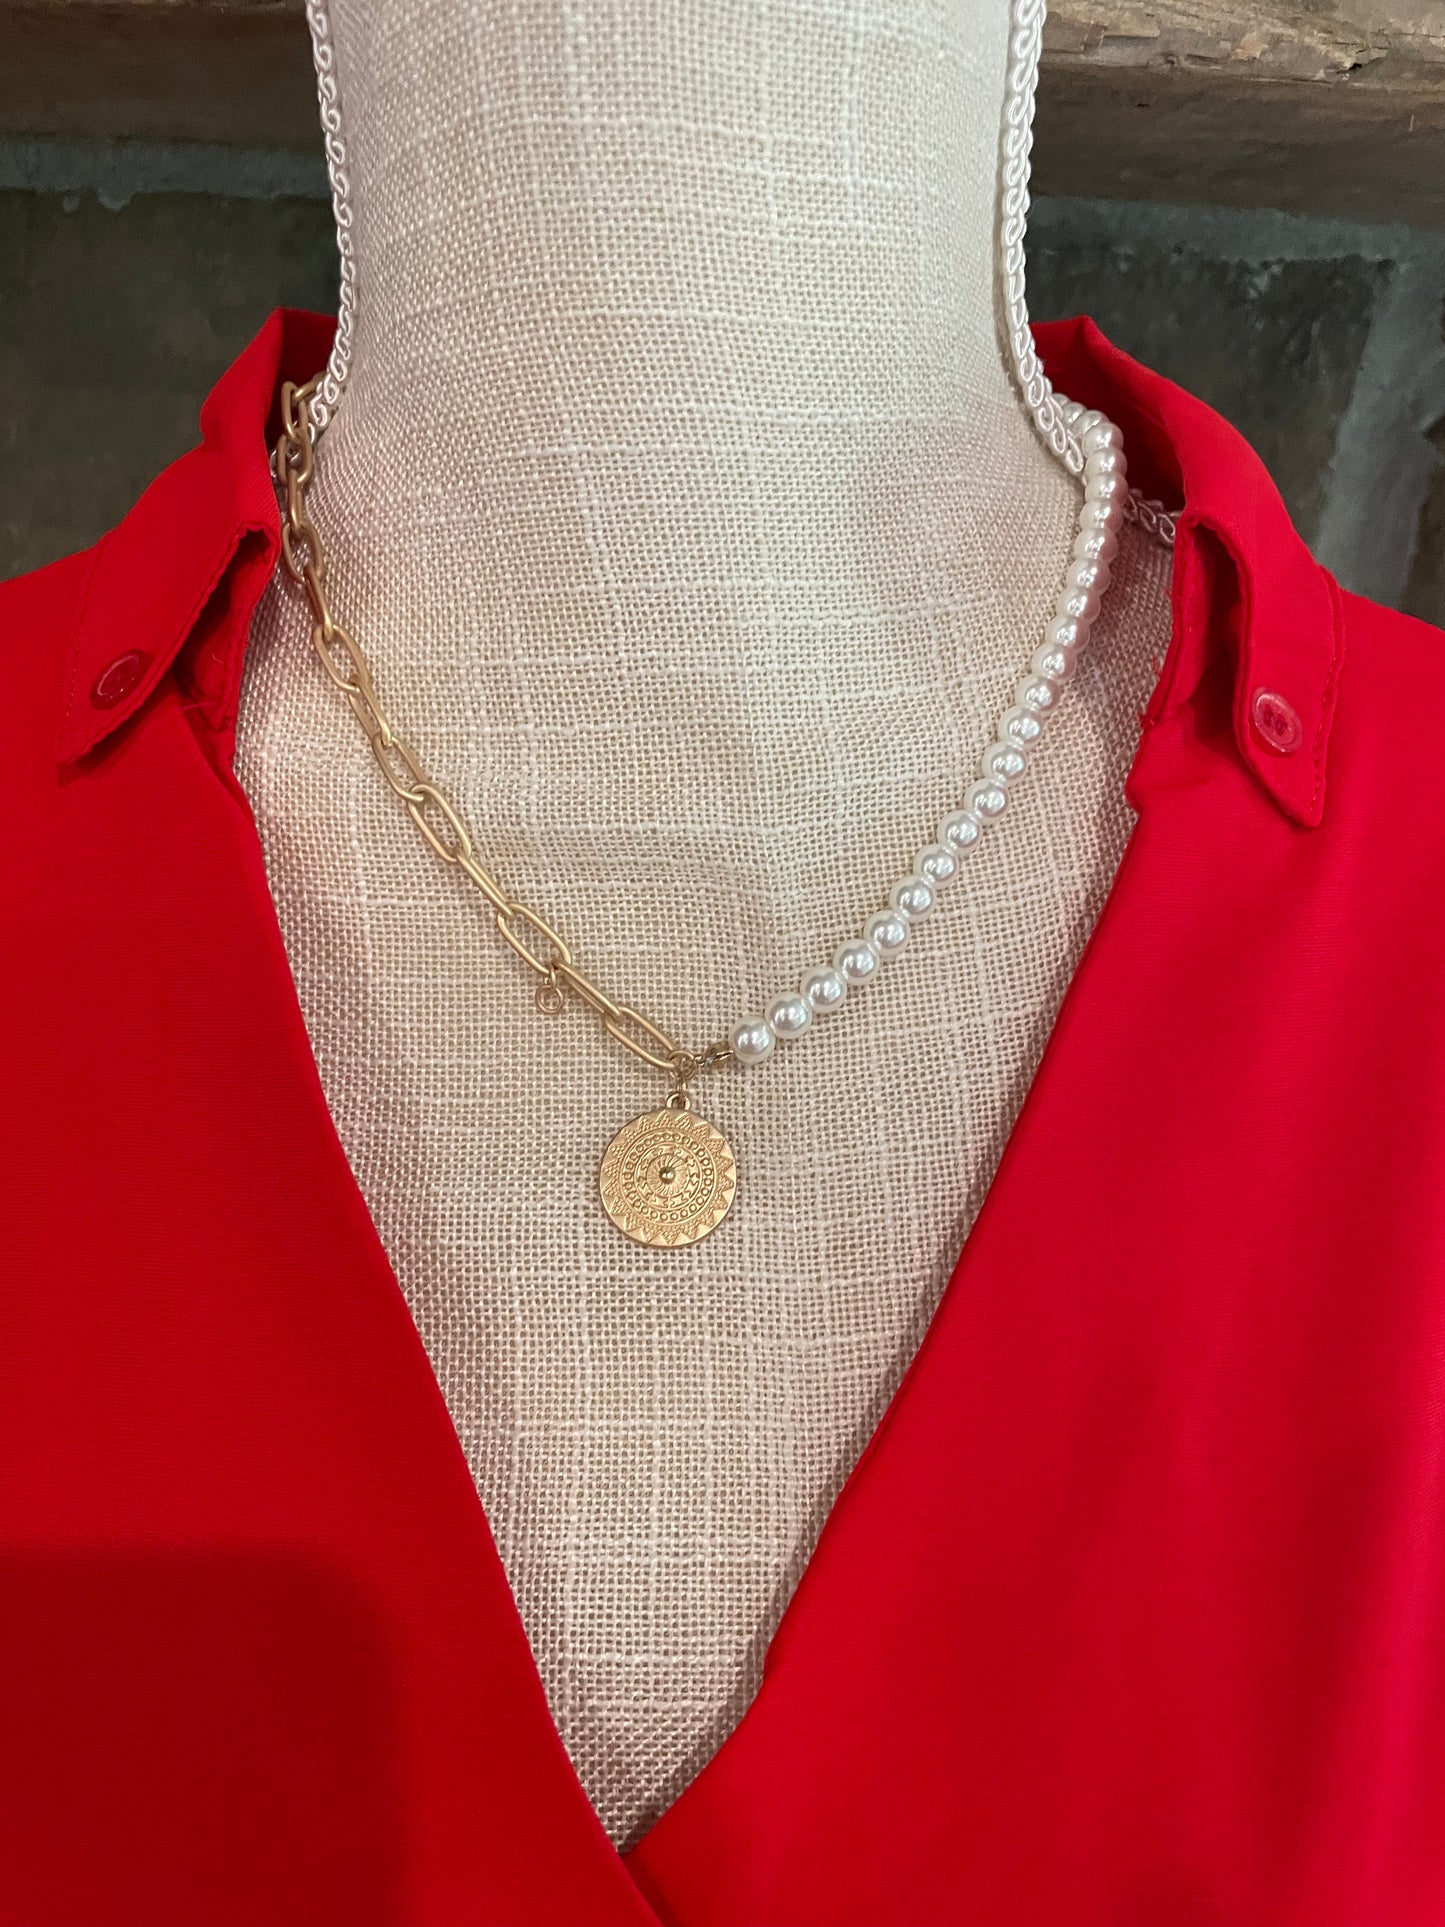 Gold/Pearl Chain w/ Medallion Pendant - JM2